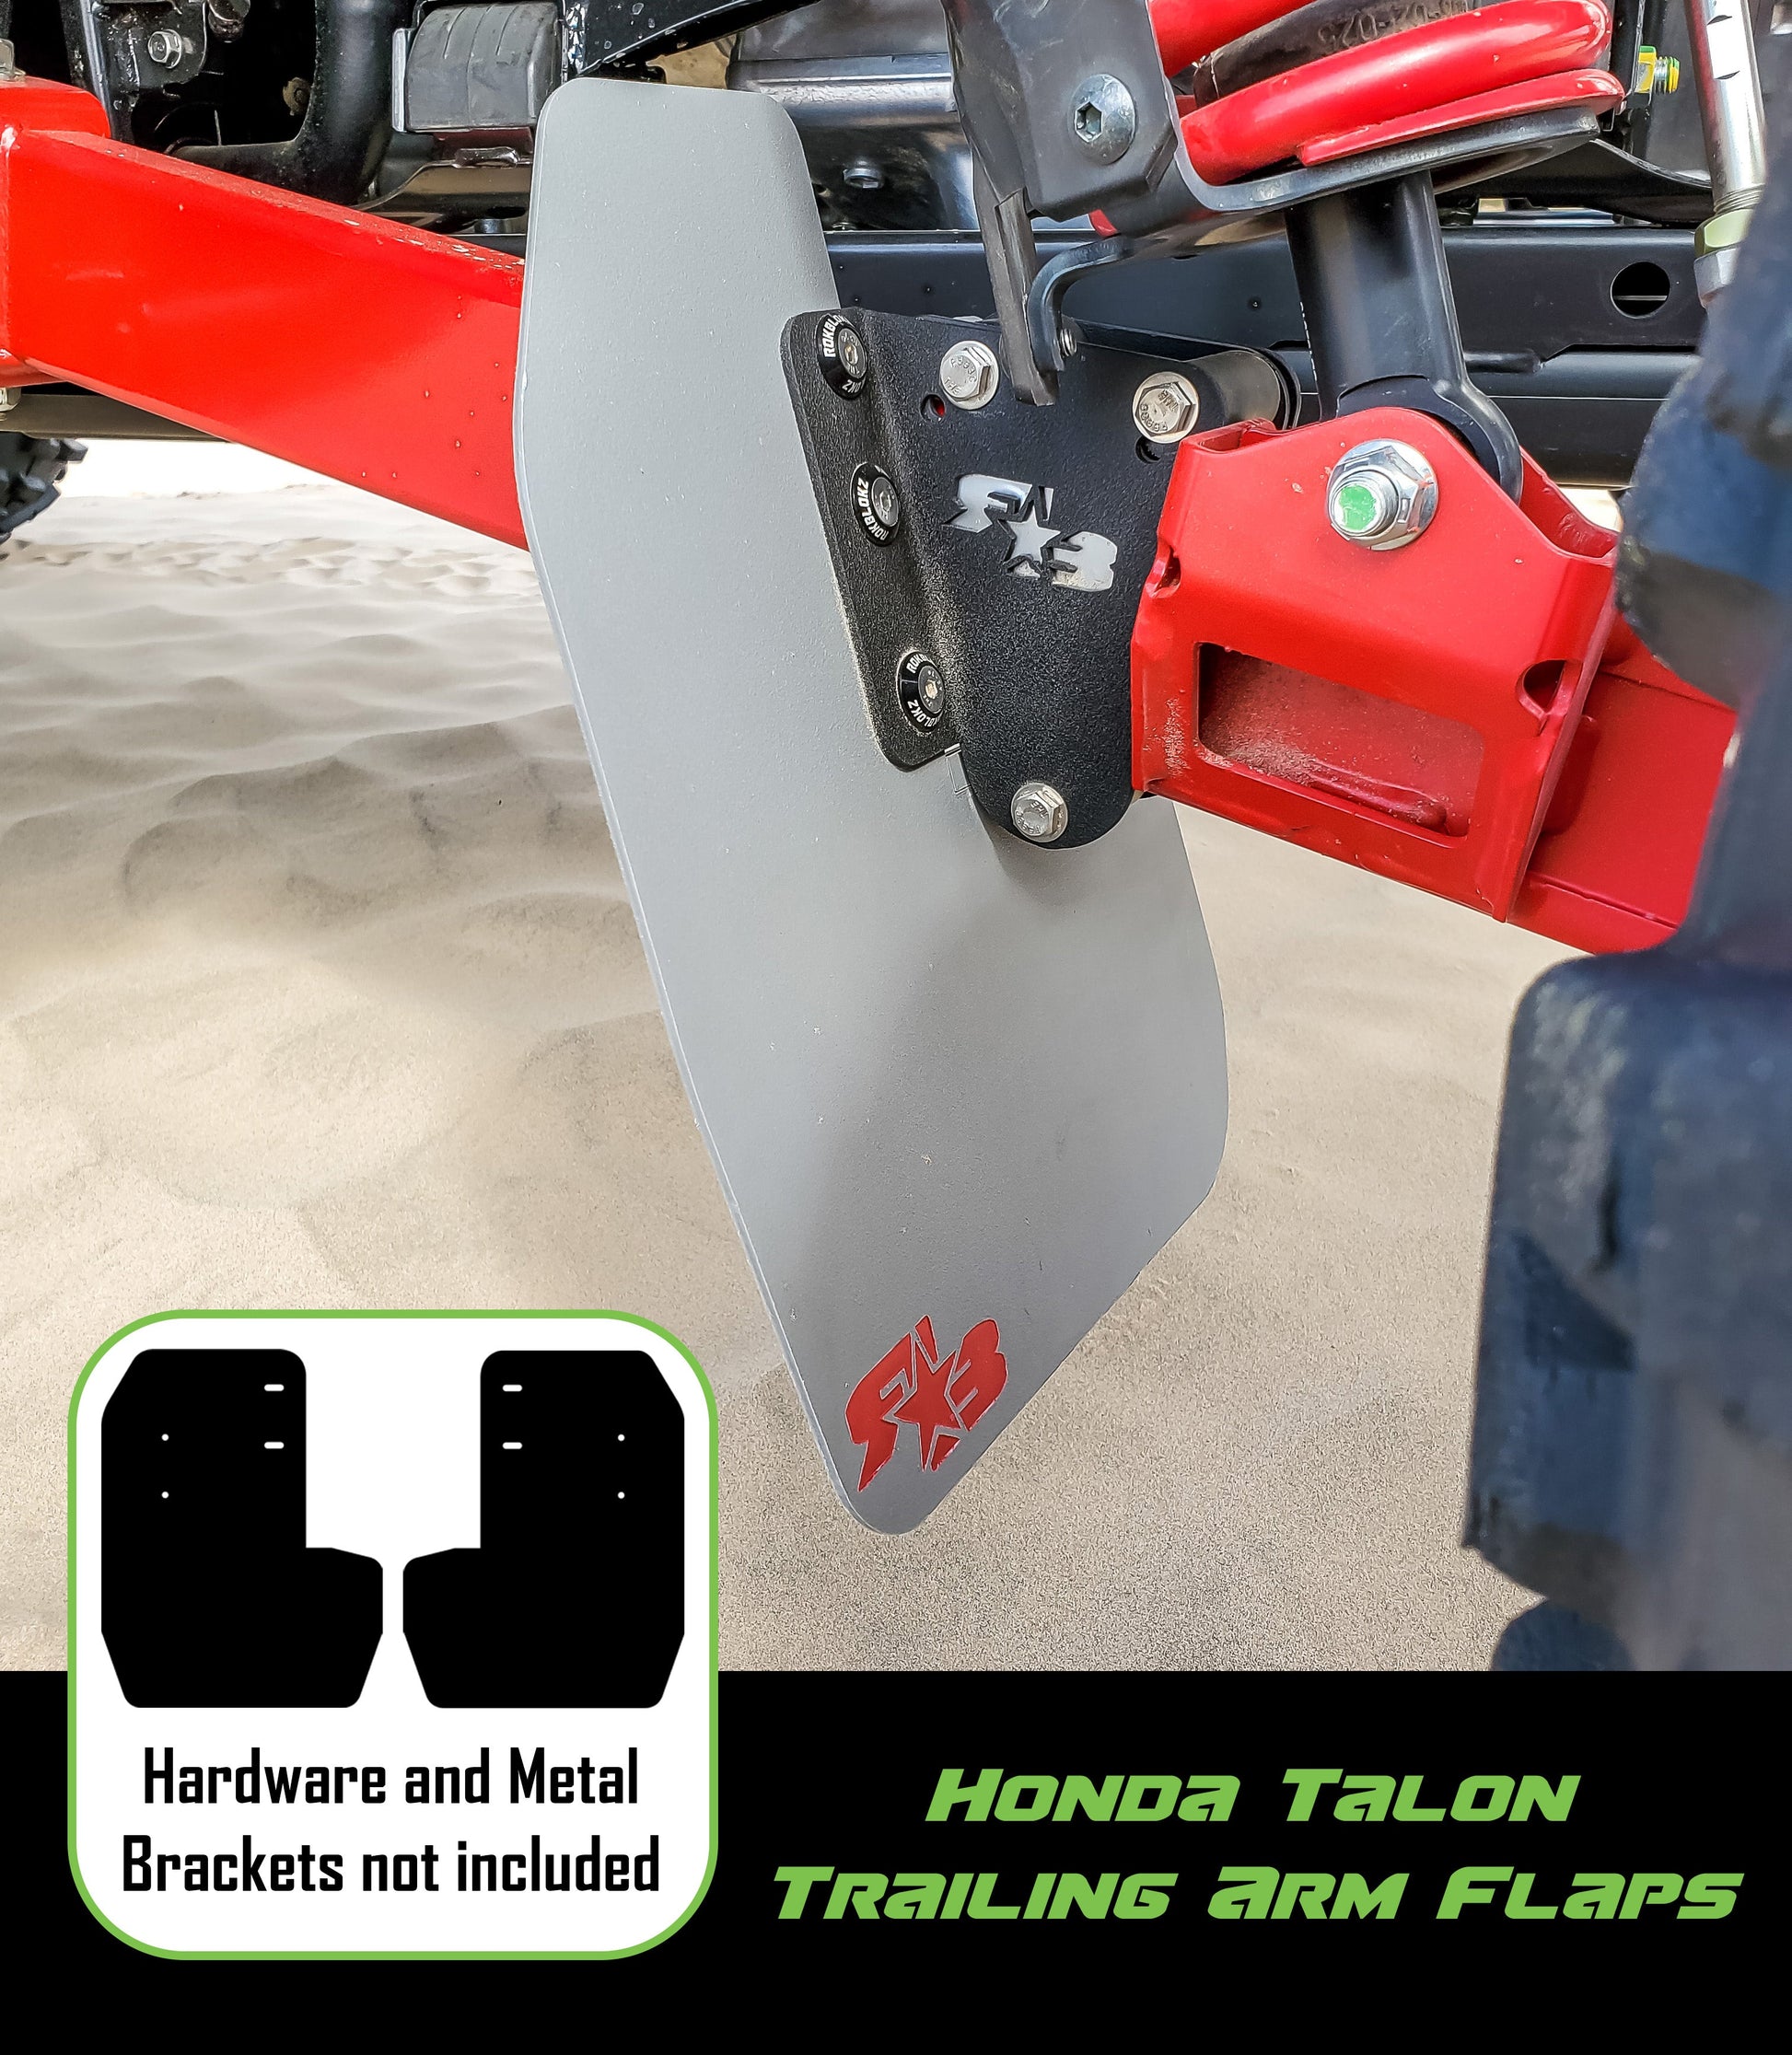 Honda Talon Replacement Flaps & Accents